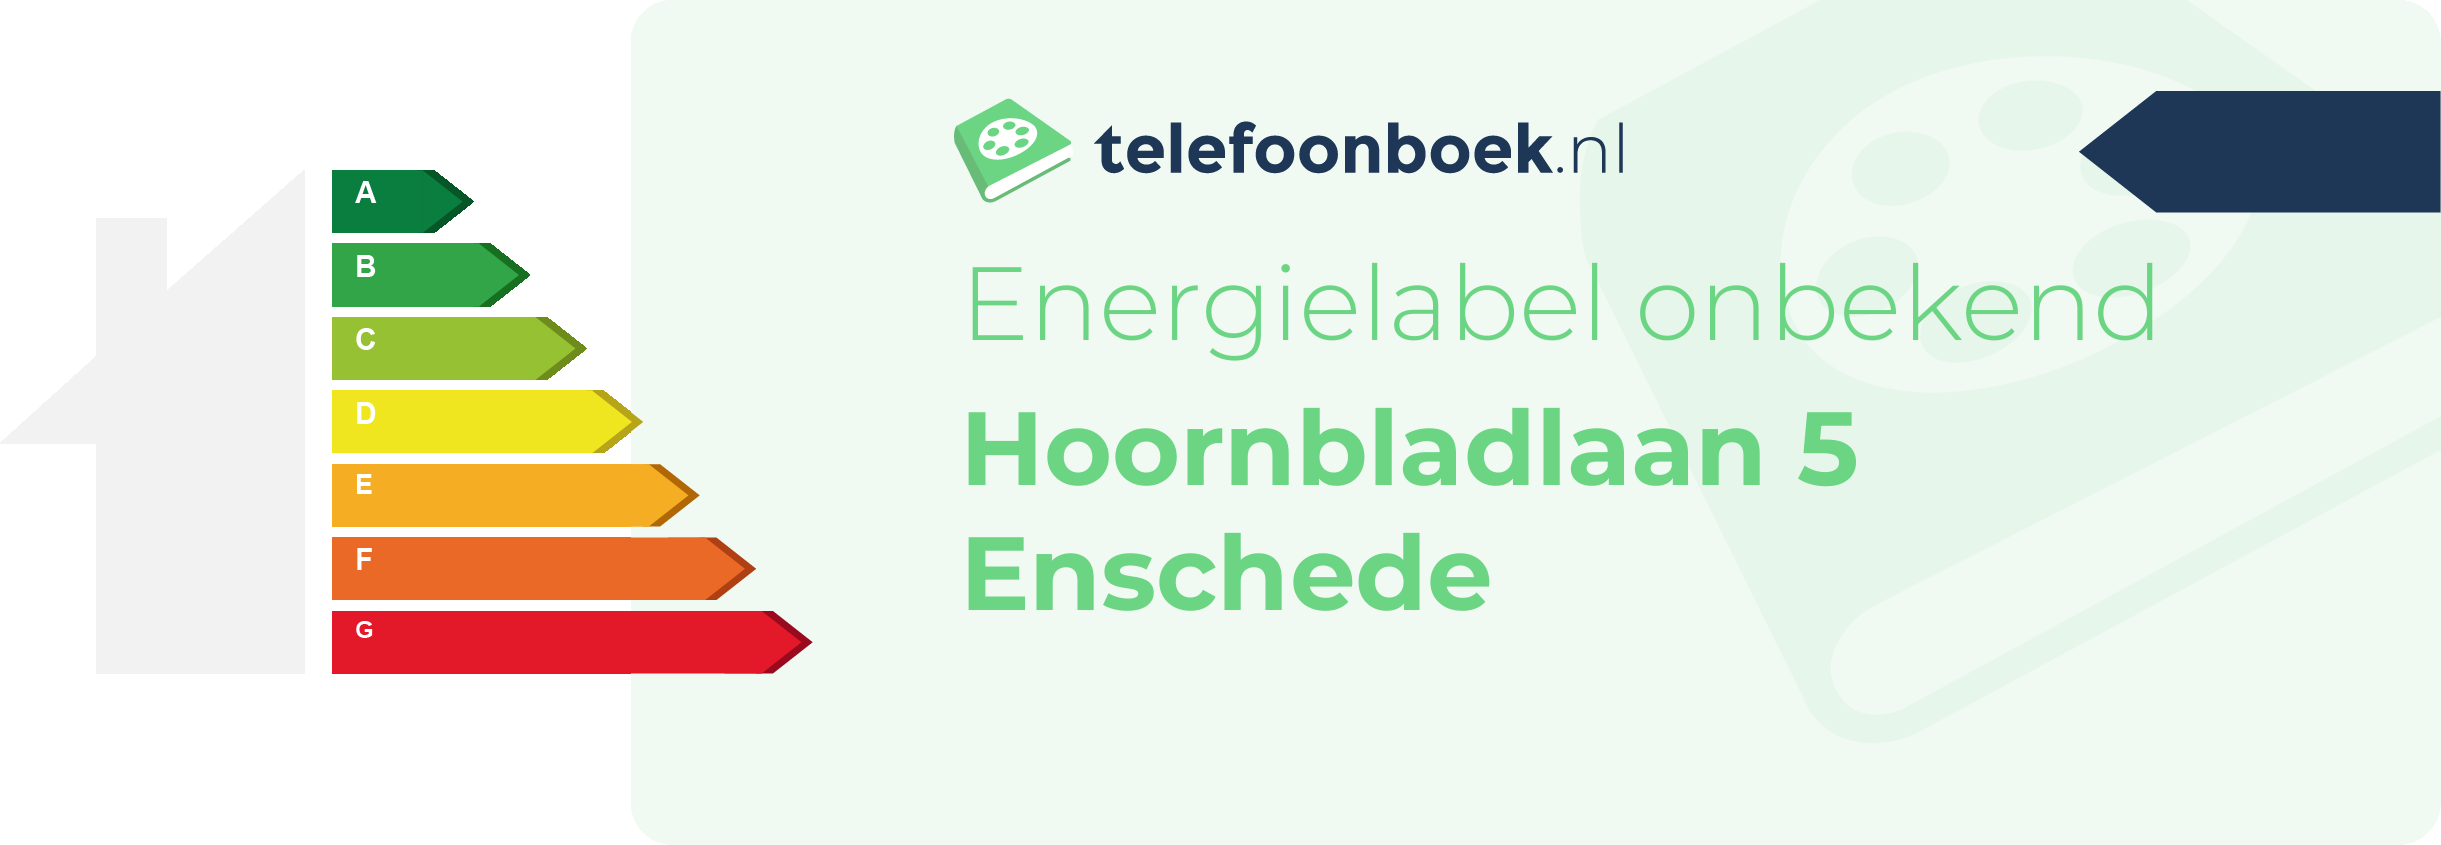 Energielabel Hoornbladlaan 5 Enschede